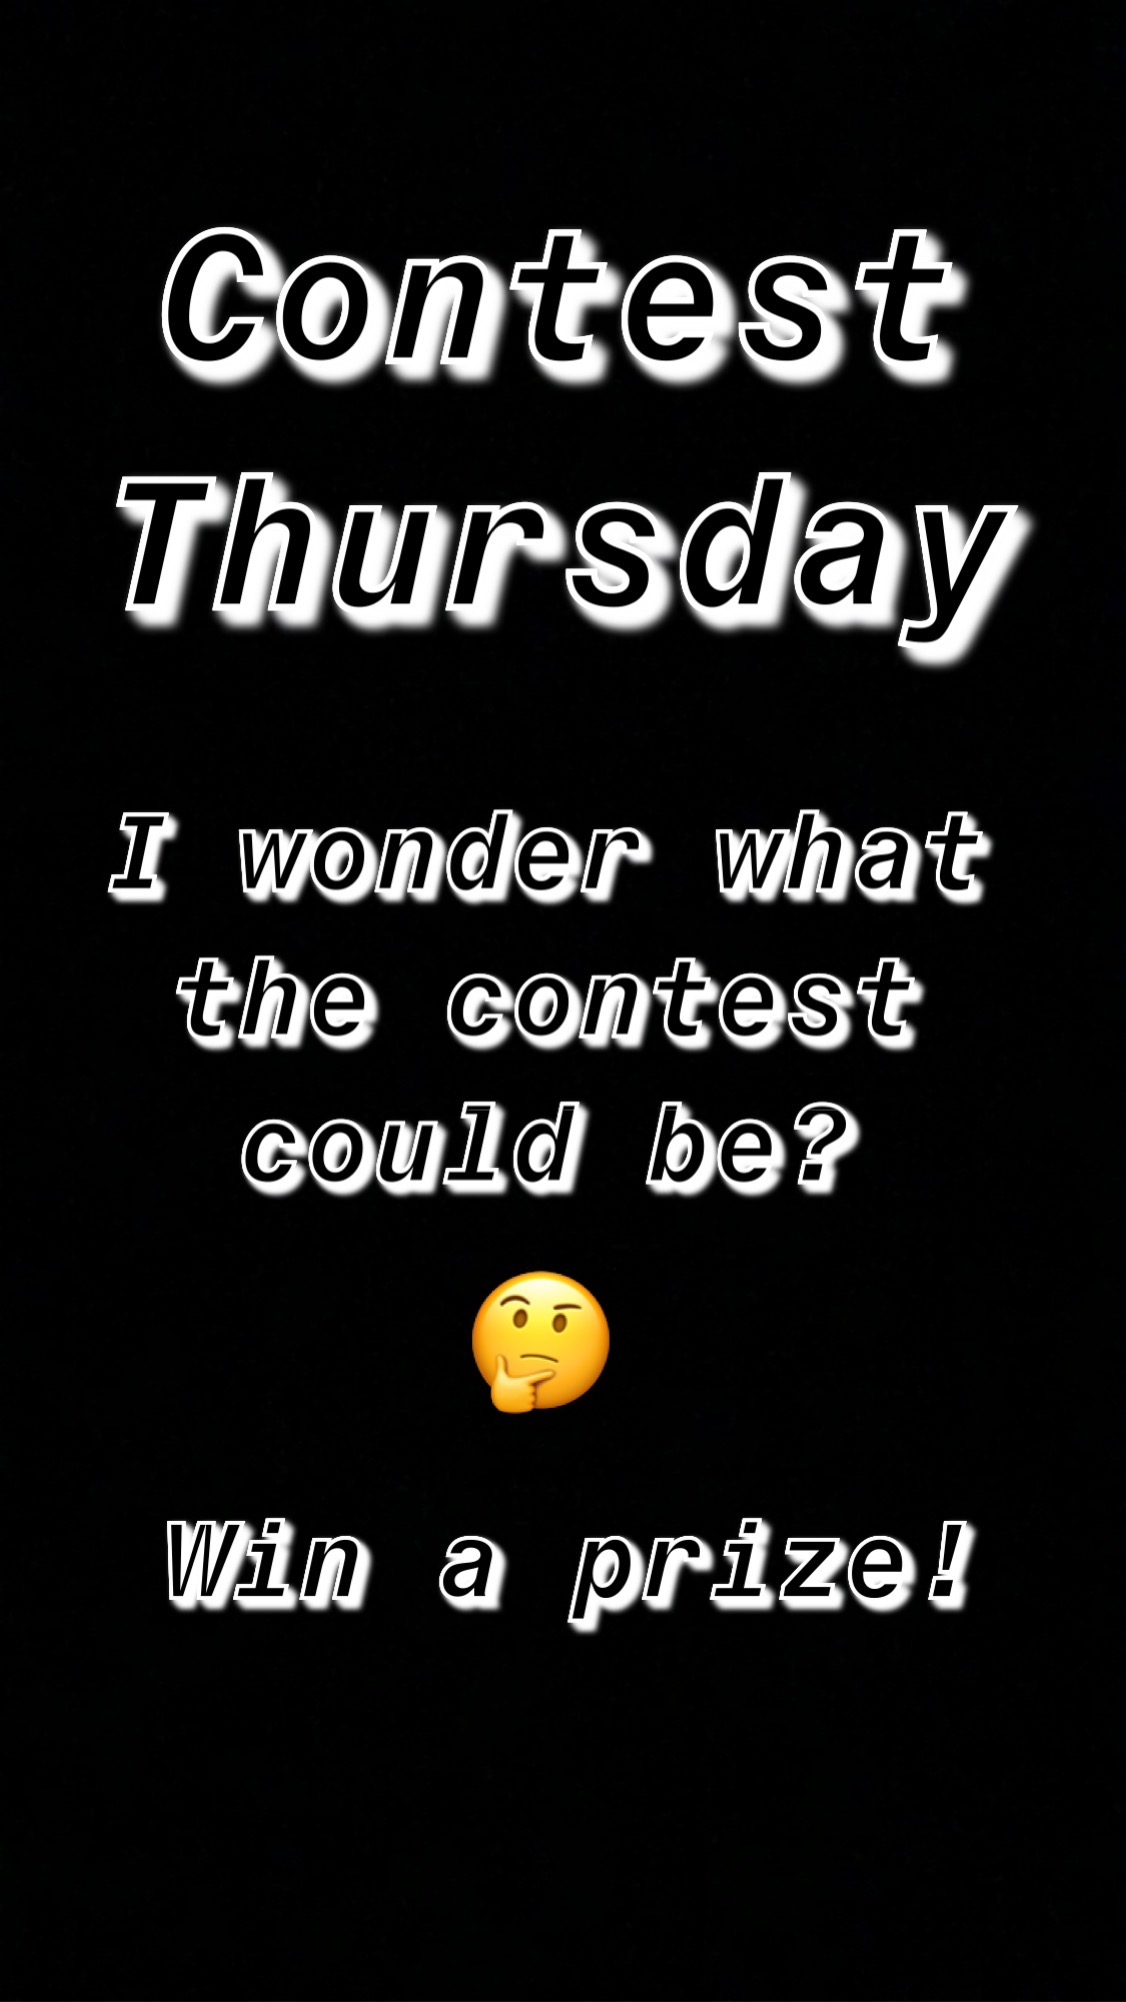 Contest Thursday